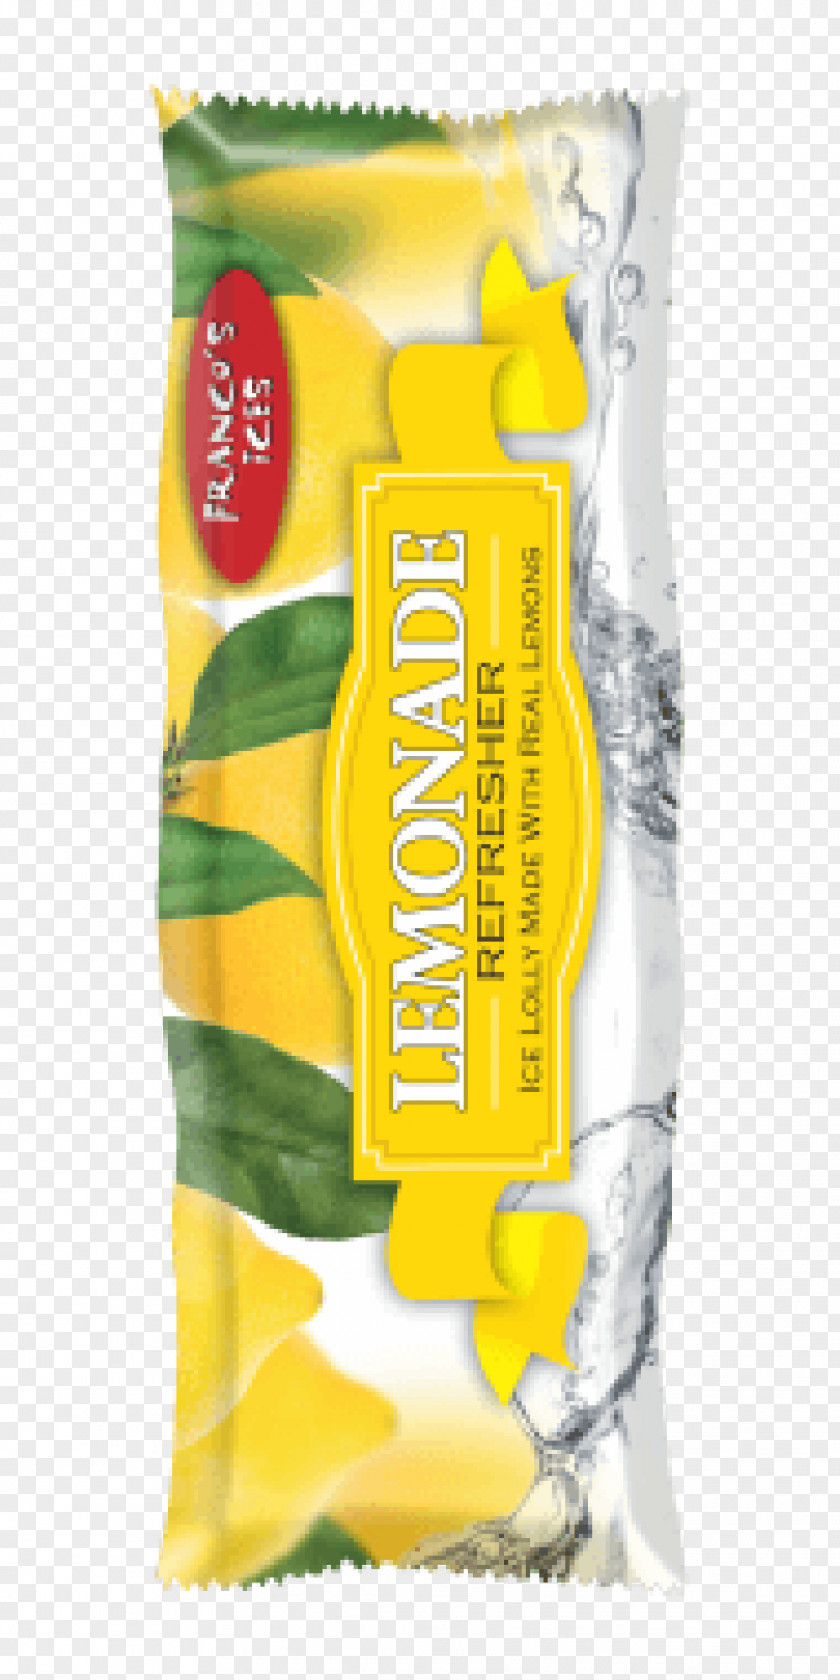 Junk Food Ice Pop Lemonade Franco Ices Ltd PNG